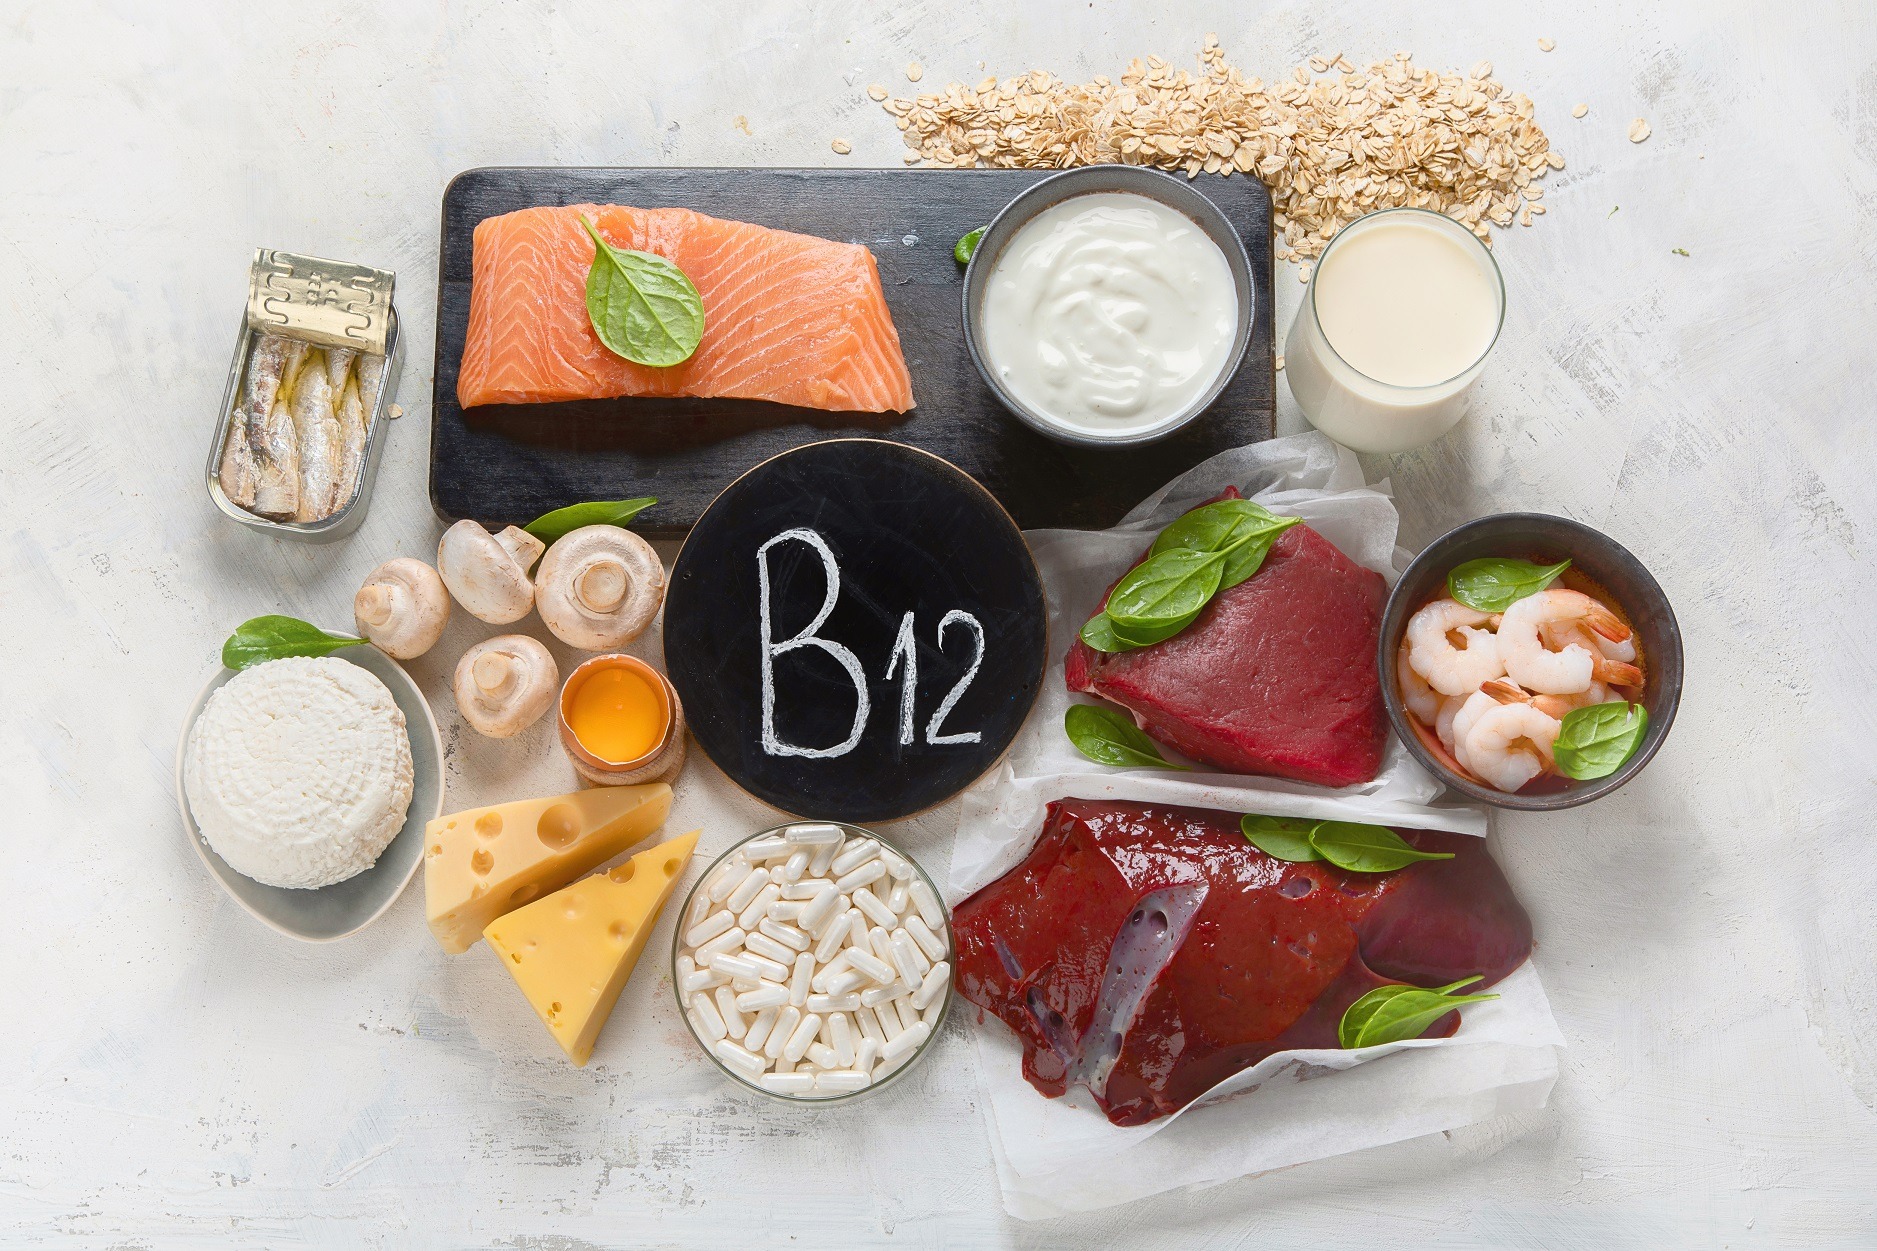 Deficiența de vitamina B12 și câștigul ponderal